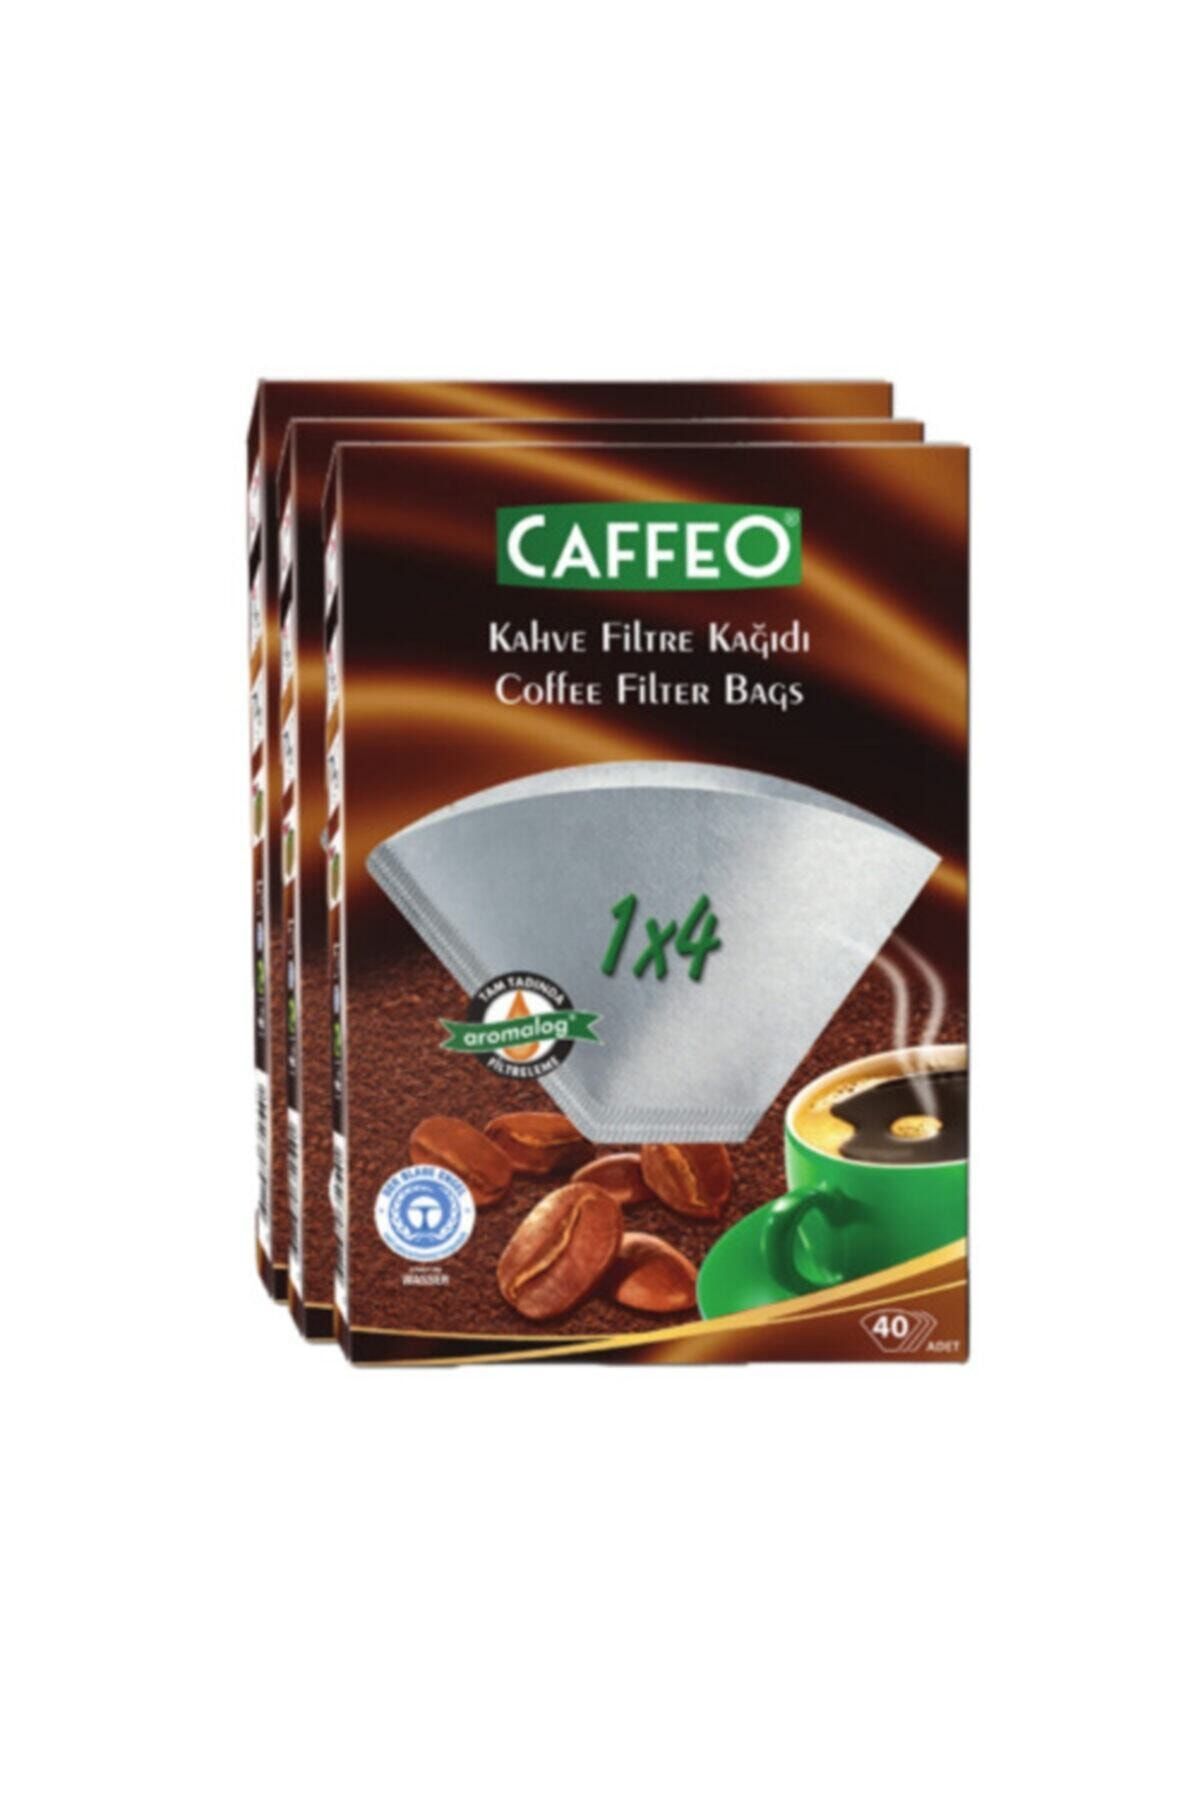 Caffeo Kahve Filtresi 3 Paket 120 Filtre Kağıdı